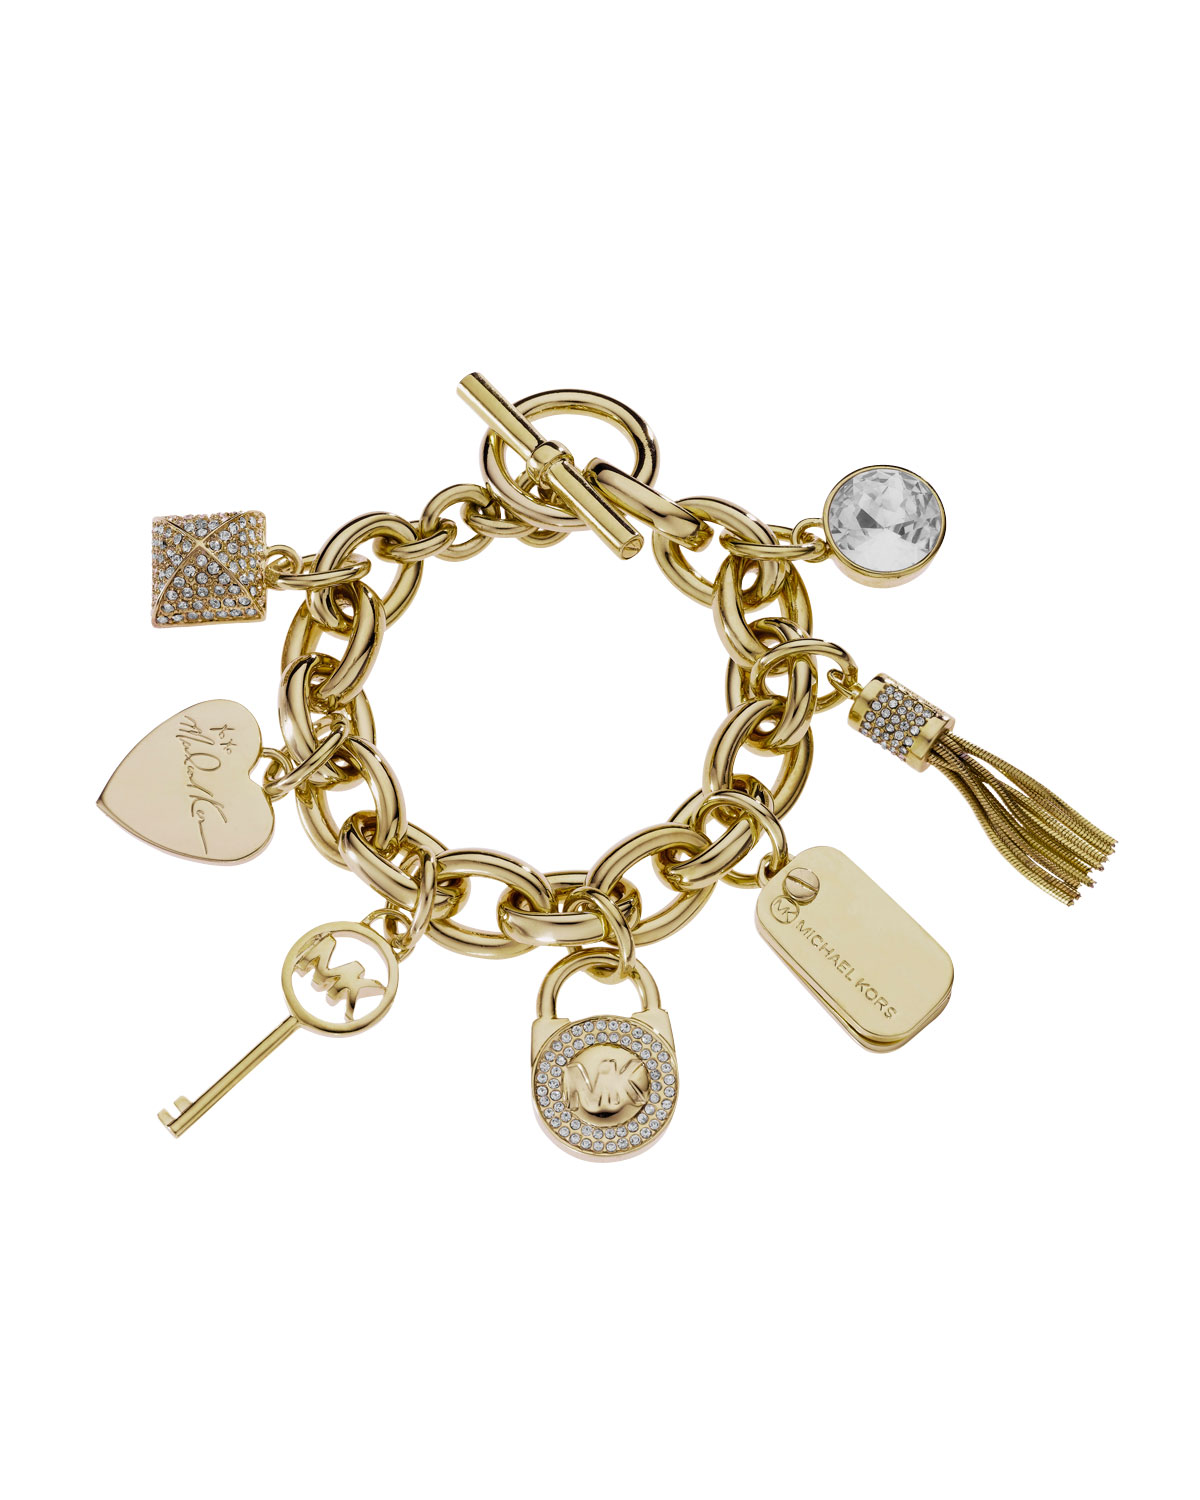 Lyst - Michael Kors Charm Bracelet, Golden in Metallic